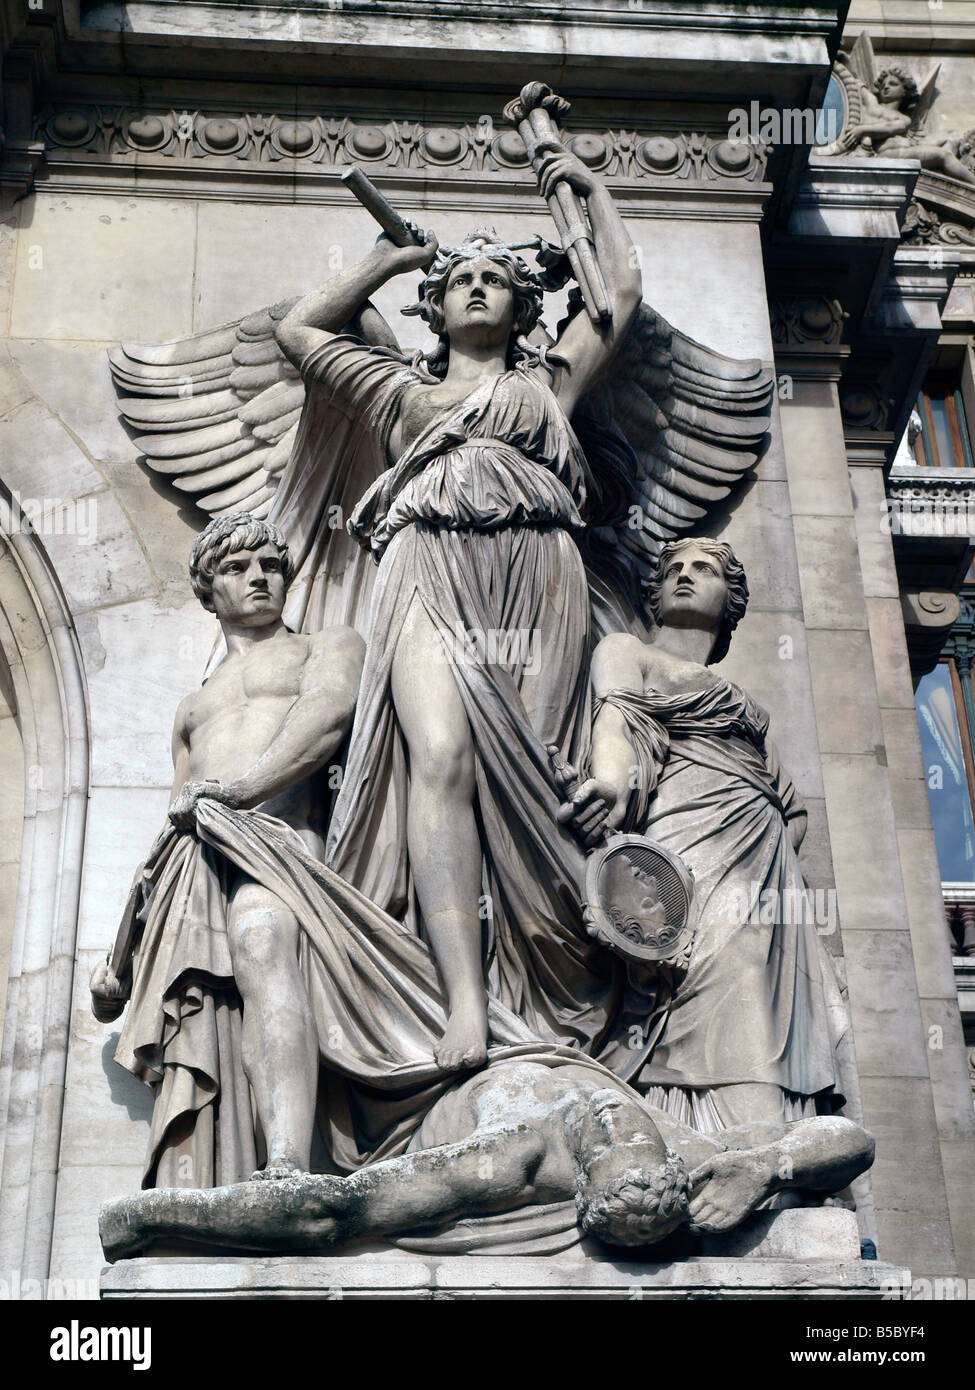 Lyrical Drama sculpture by Jean-Joseph Perraud facade of Opera Garnier Paris France Europe EU Stock Photo